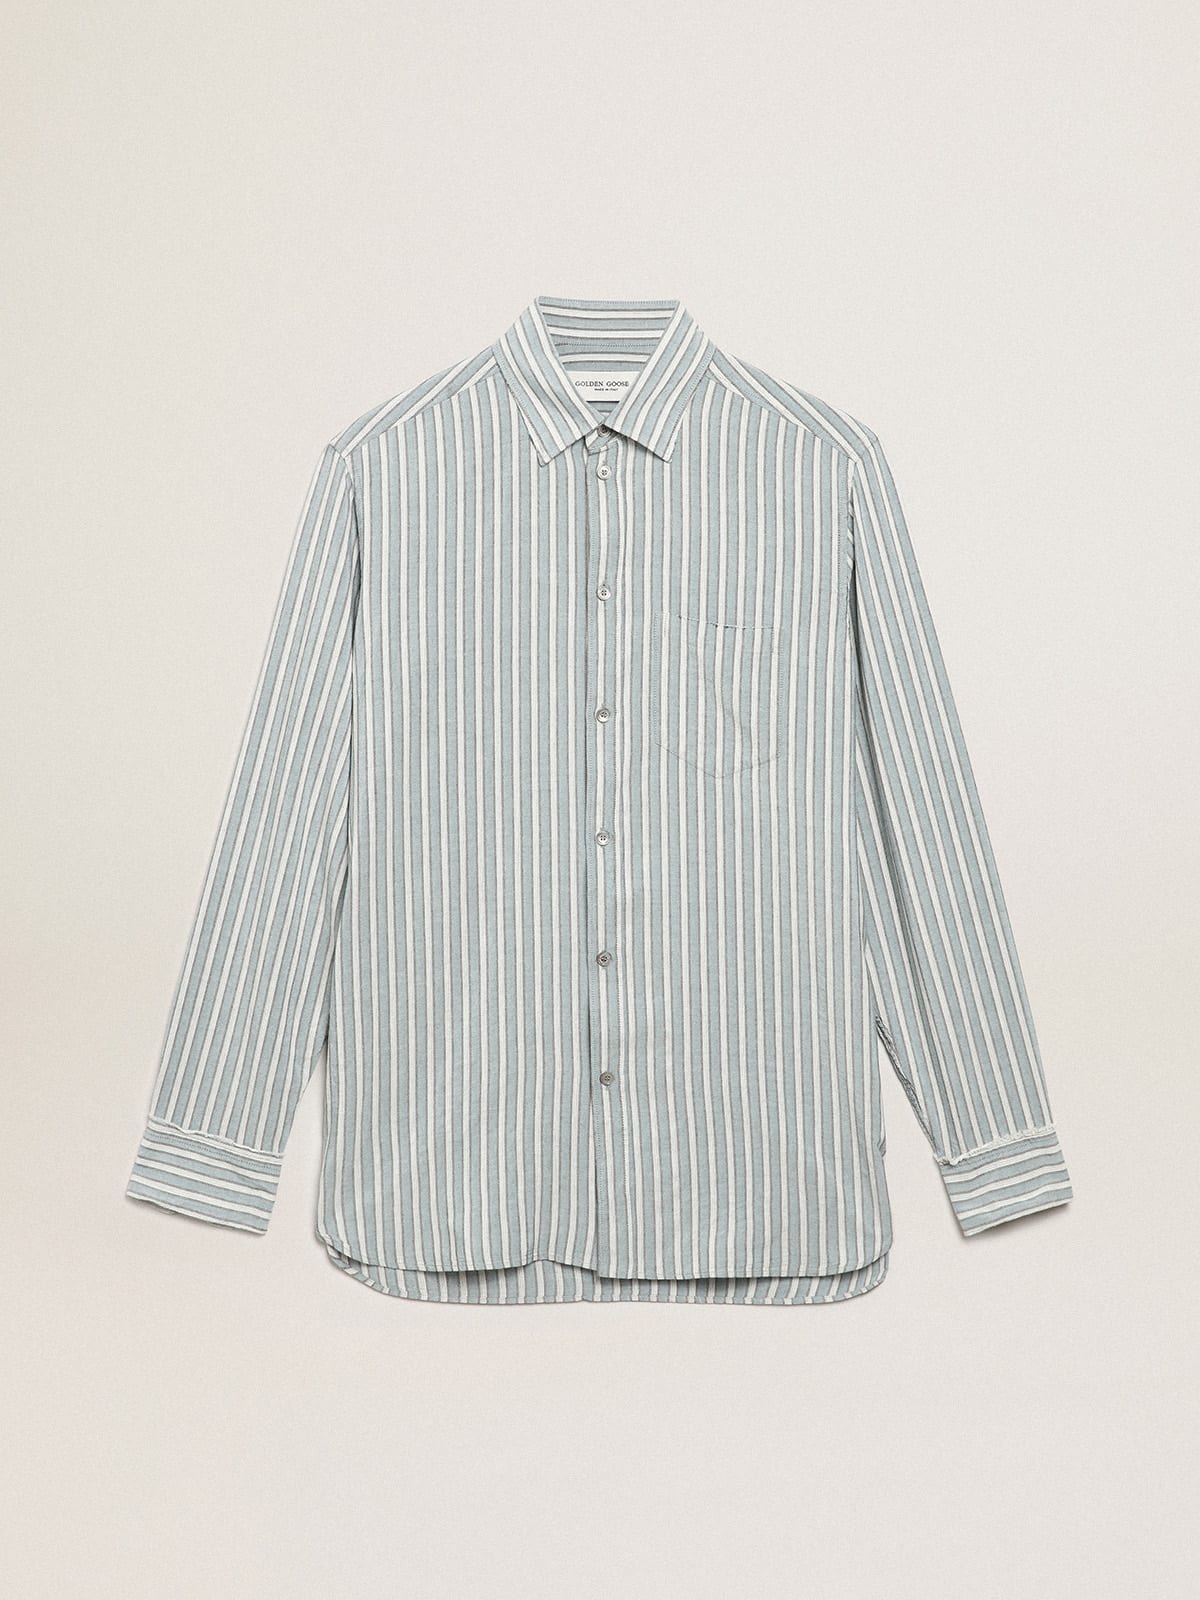 Journey Collection men's shirt with aqua stripes